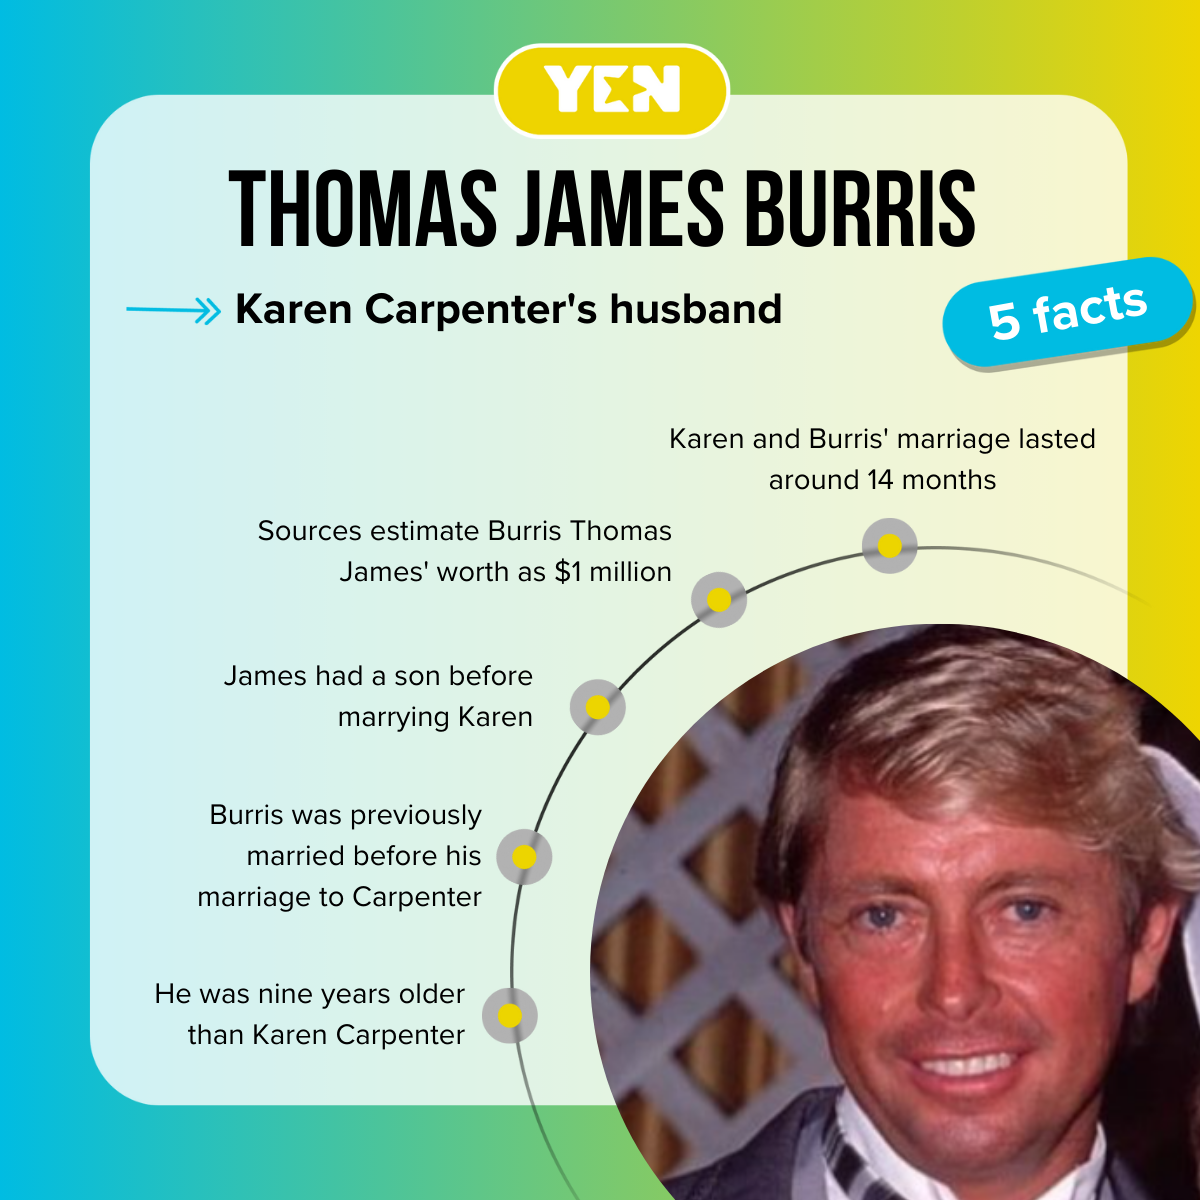 What happened to Thomas James Burris, Karen Carpenter's husband?